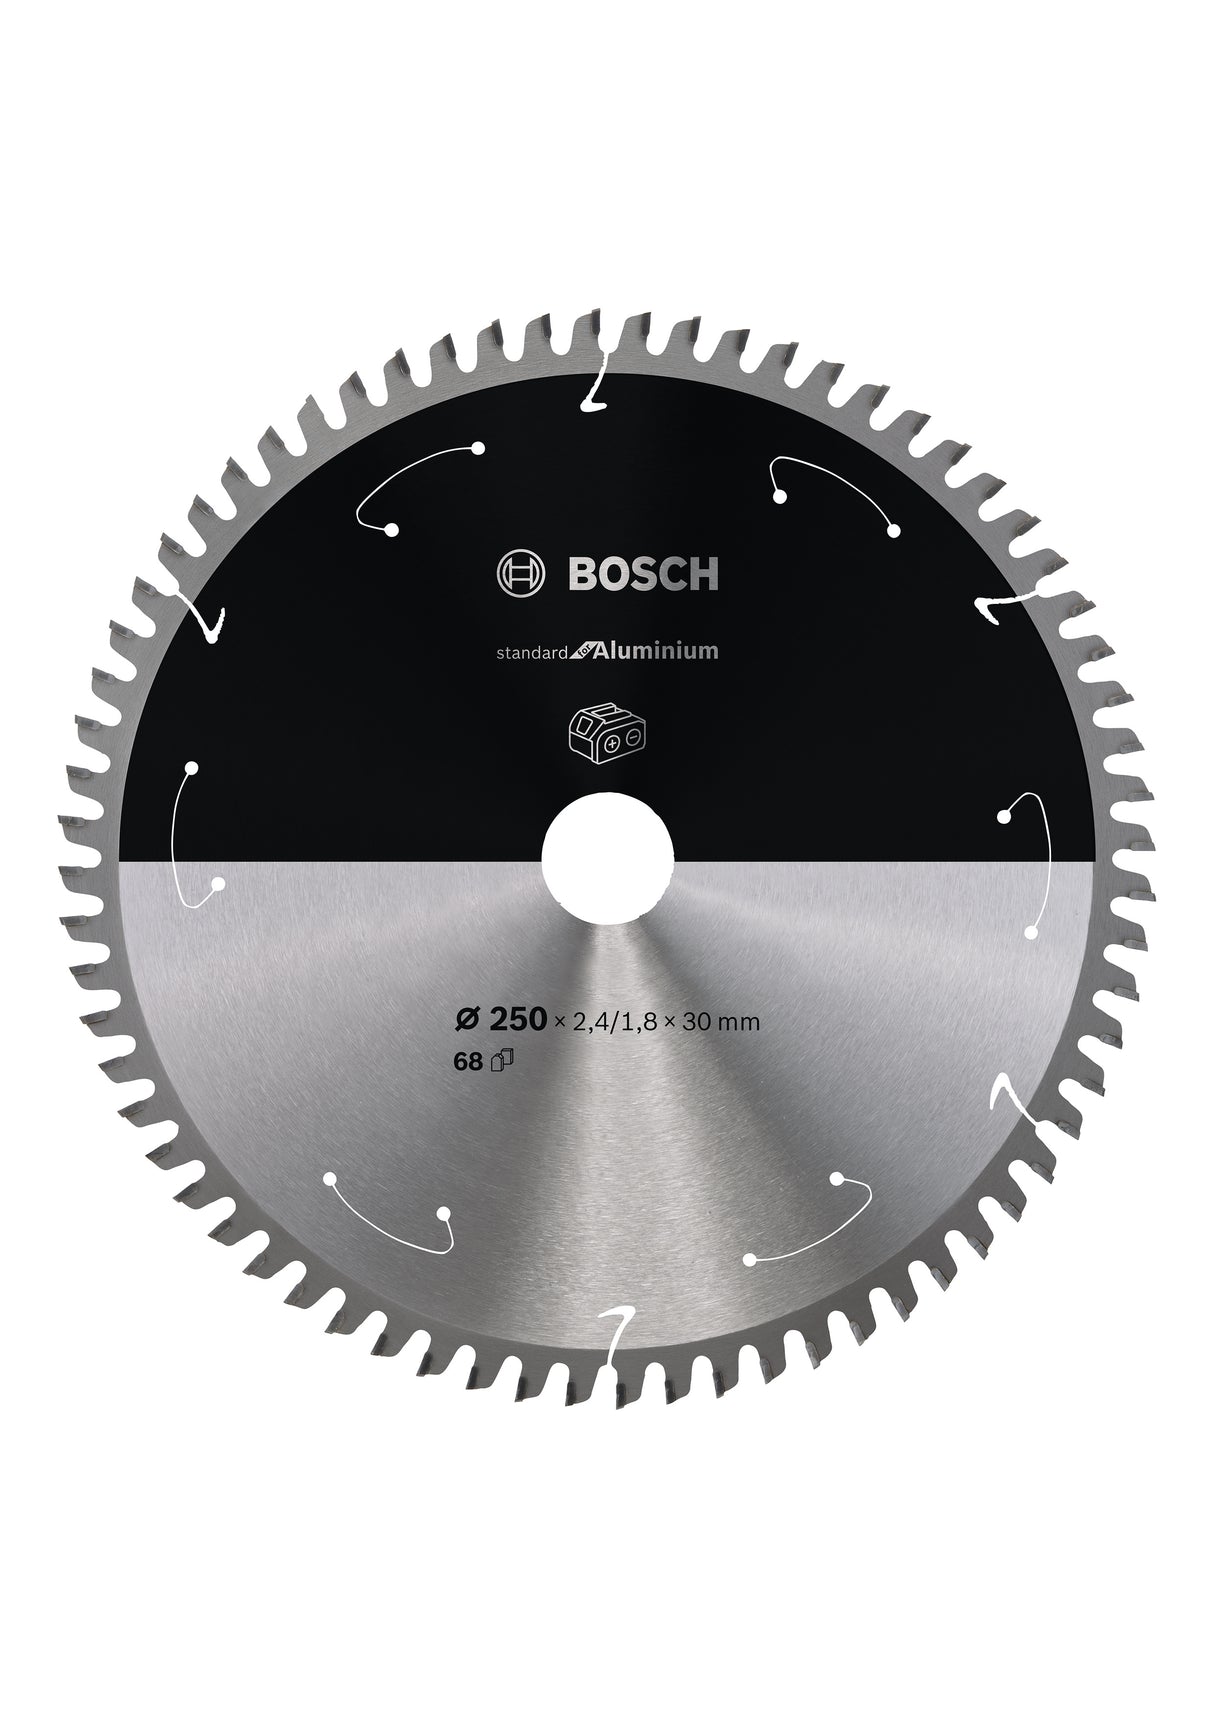 Bosch Professional Aluminium Circular Saw Blade for Cordless Saws - 250x2.4/1.8x30 T68 - Standard